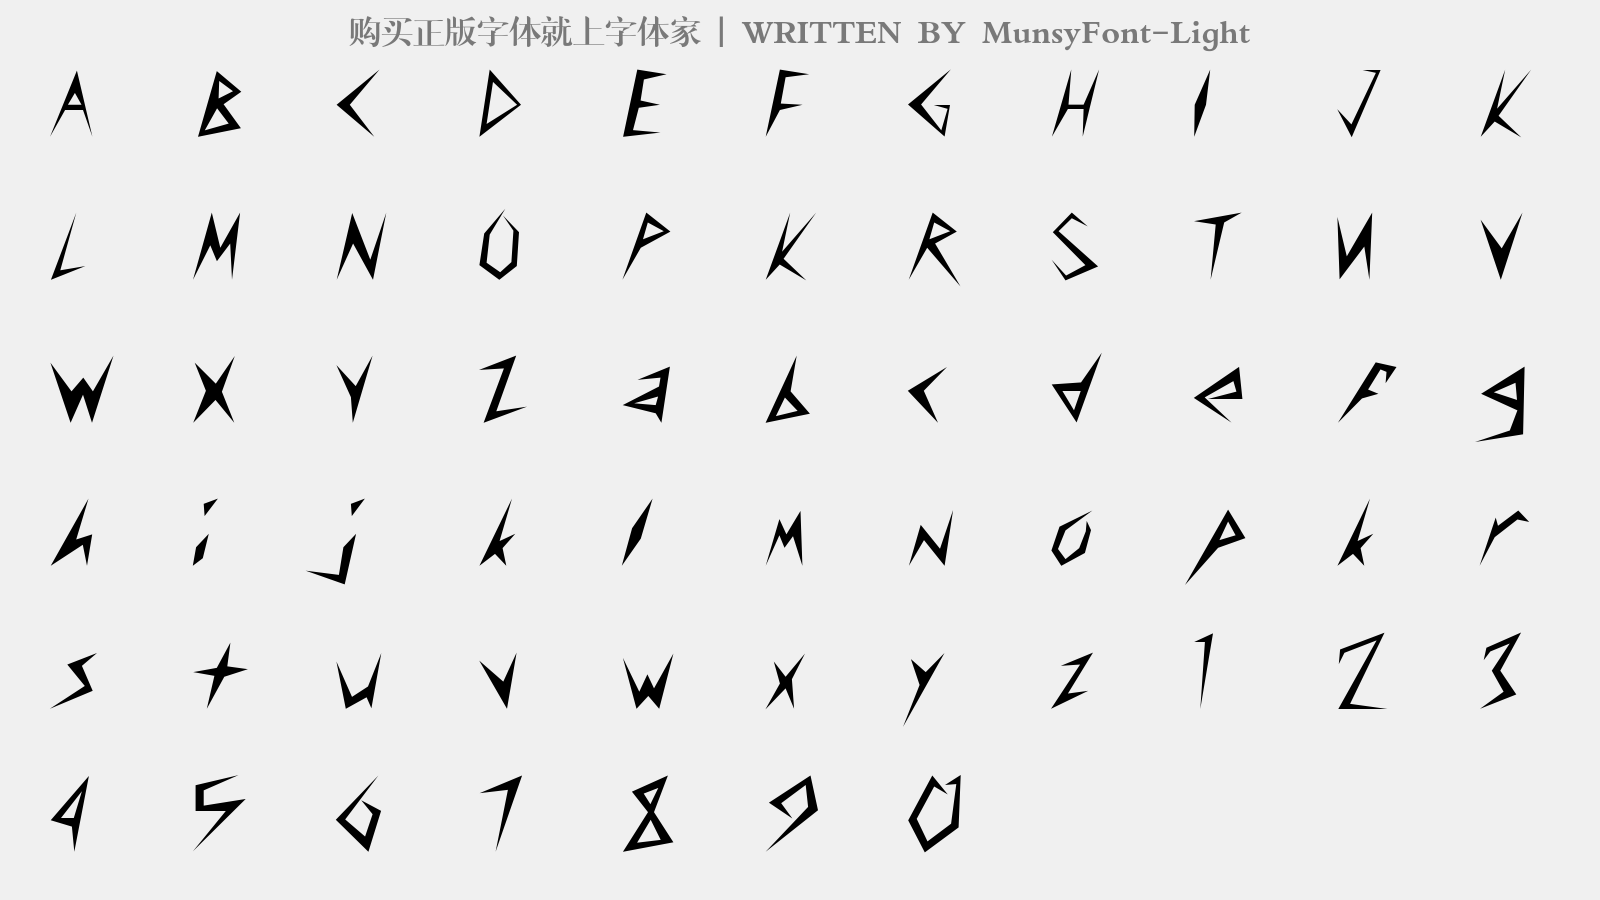 MunsyFont-Light - 大写字母/小写字母/数字